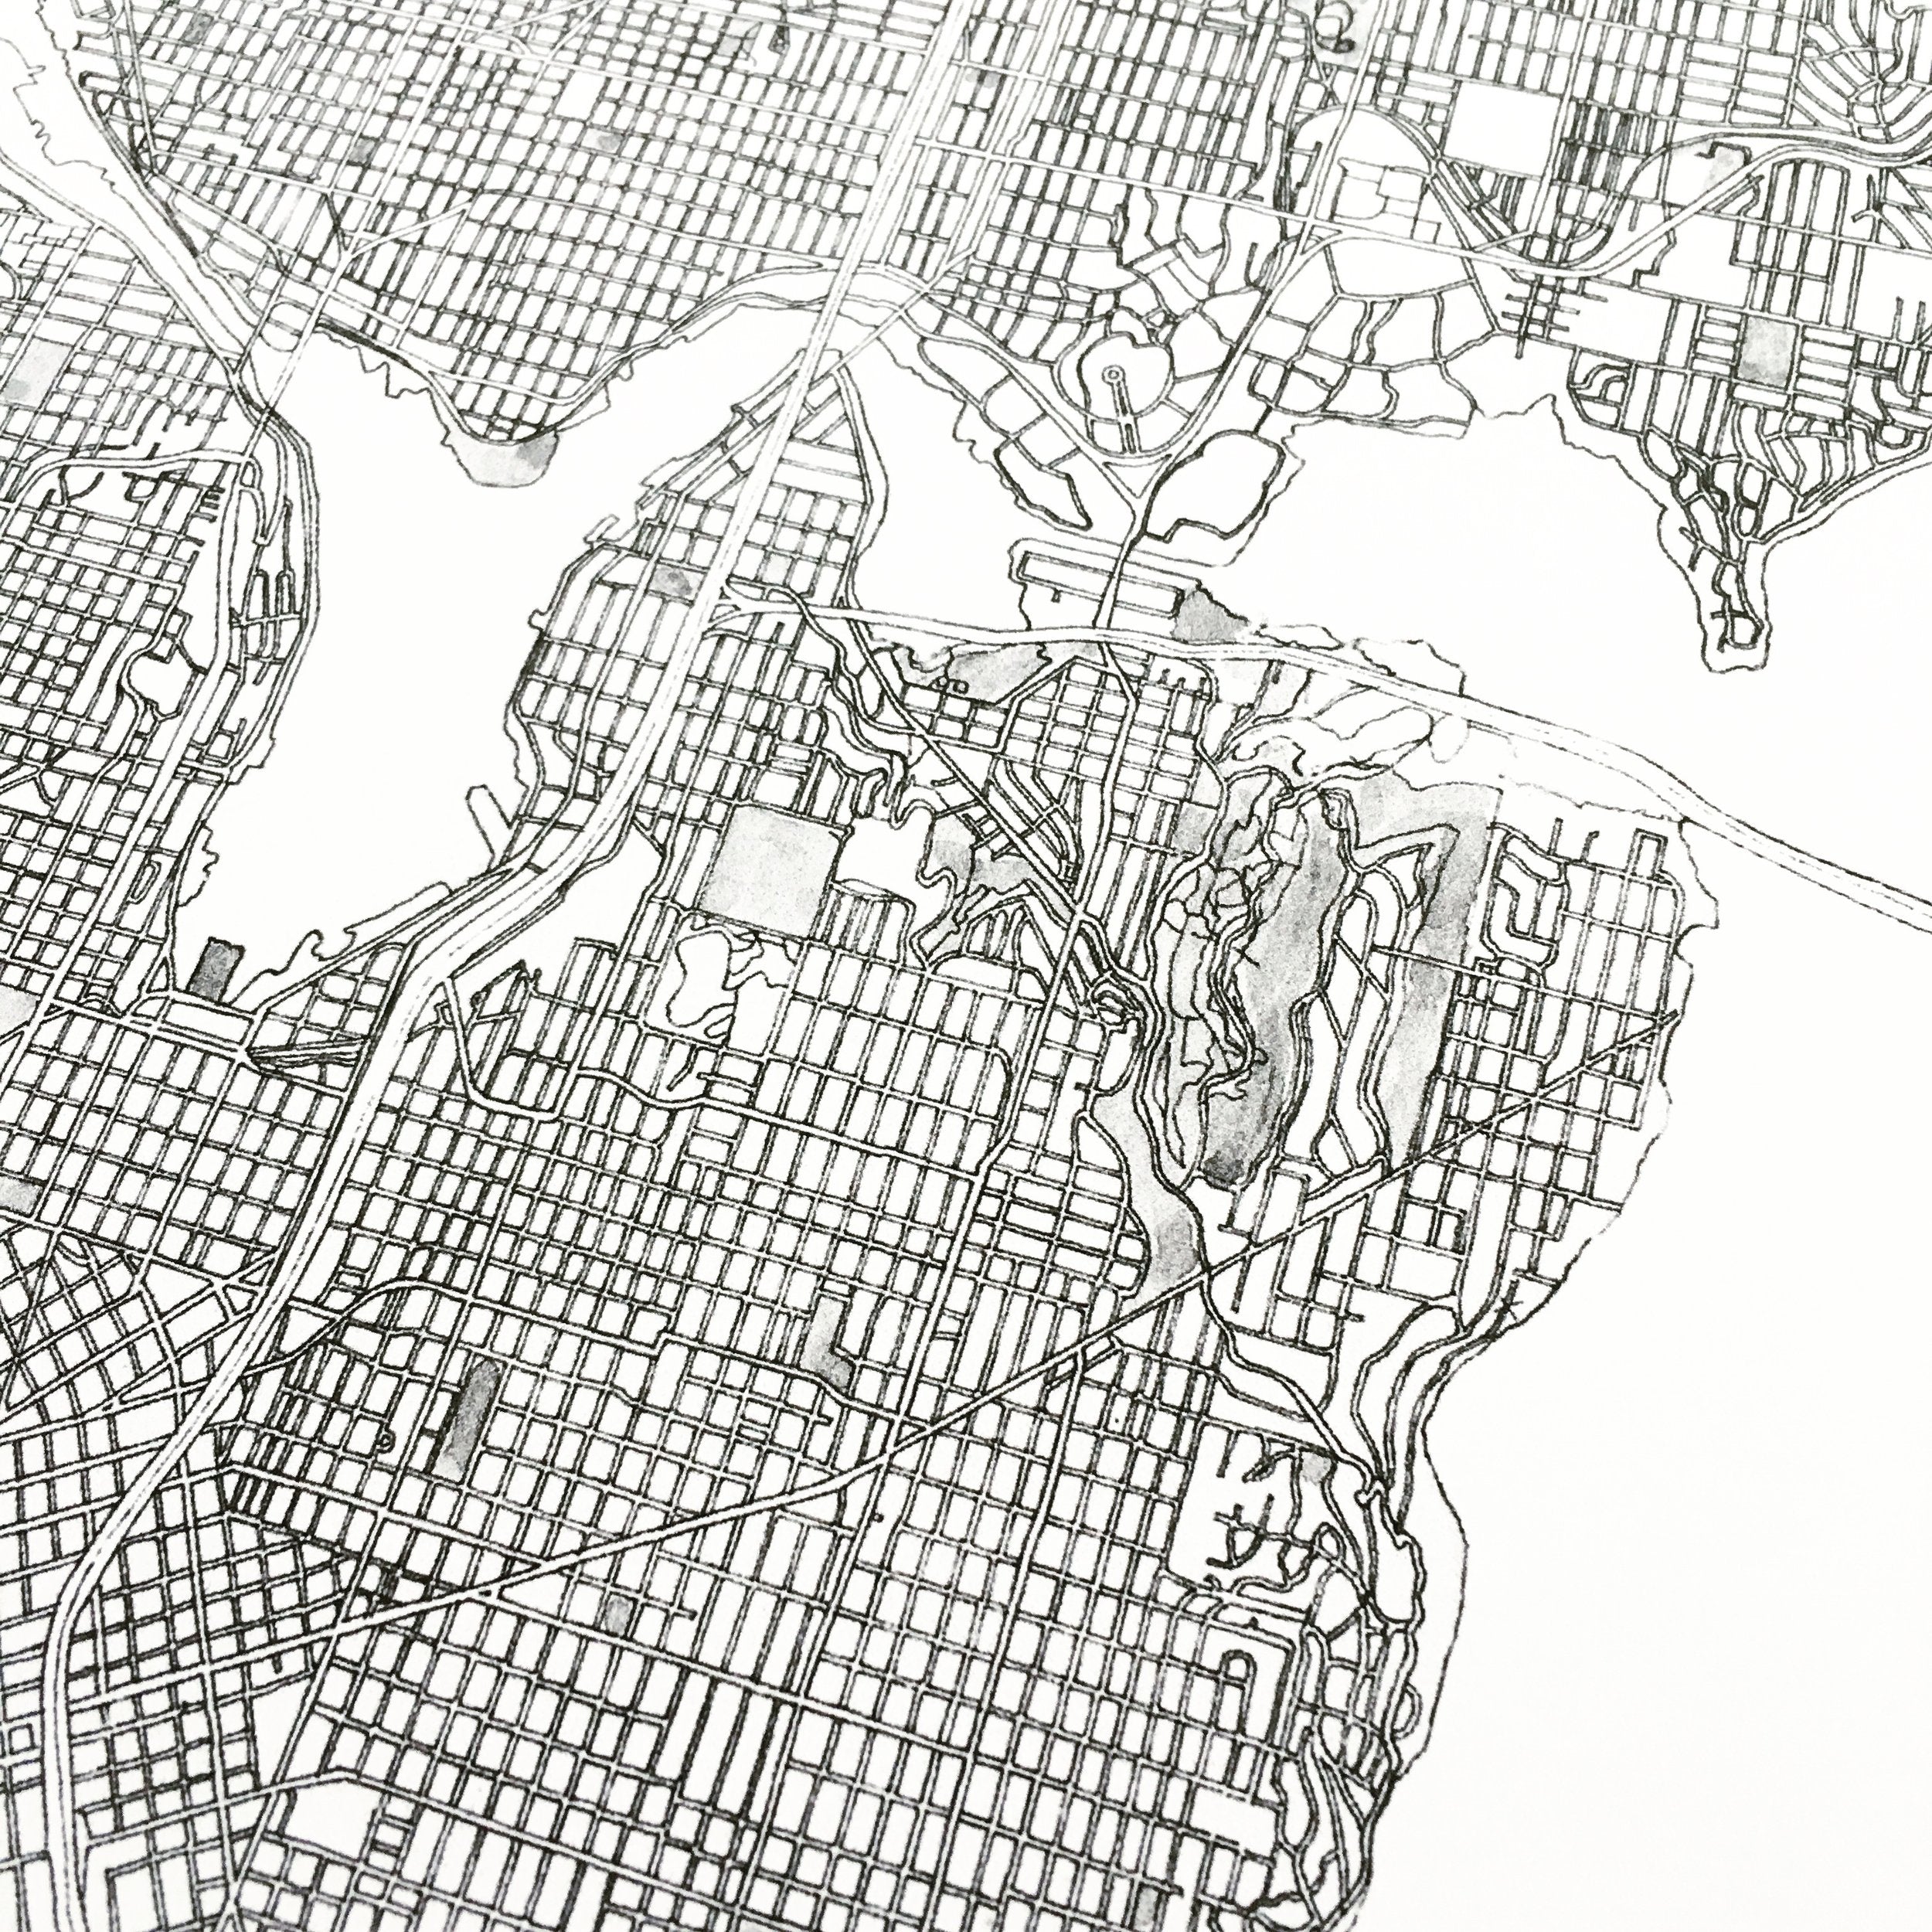 City of SEATTLE Urban Fabrics City Map: PRINT